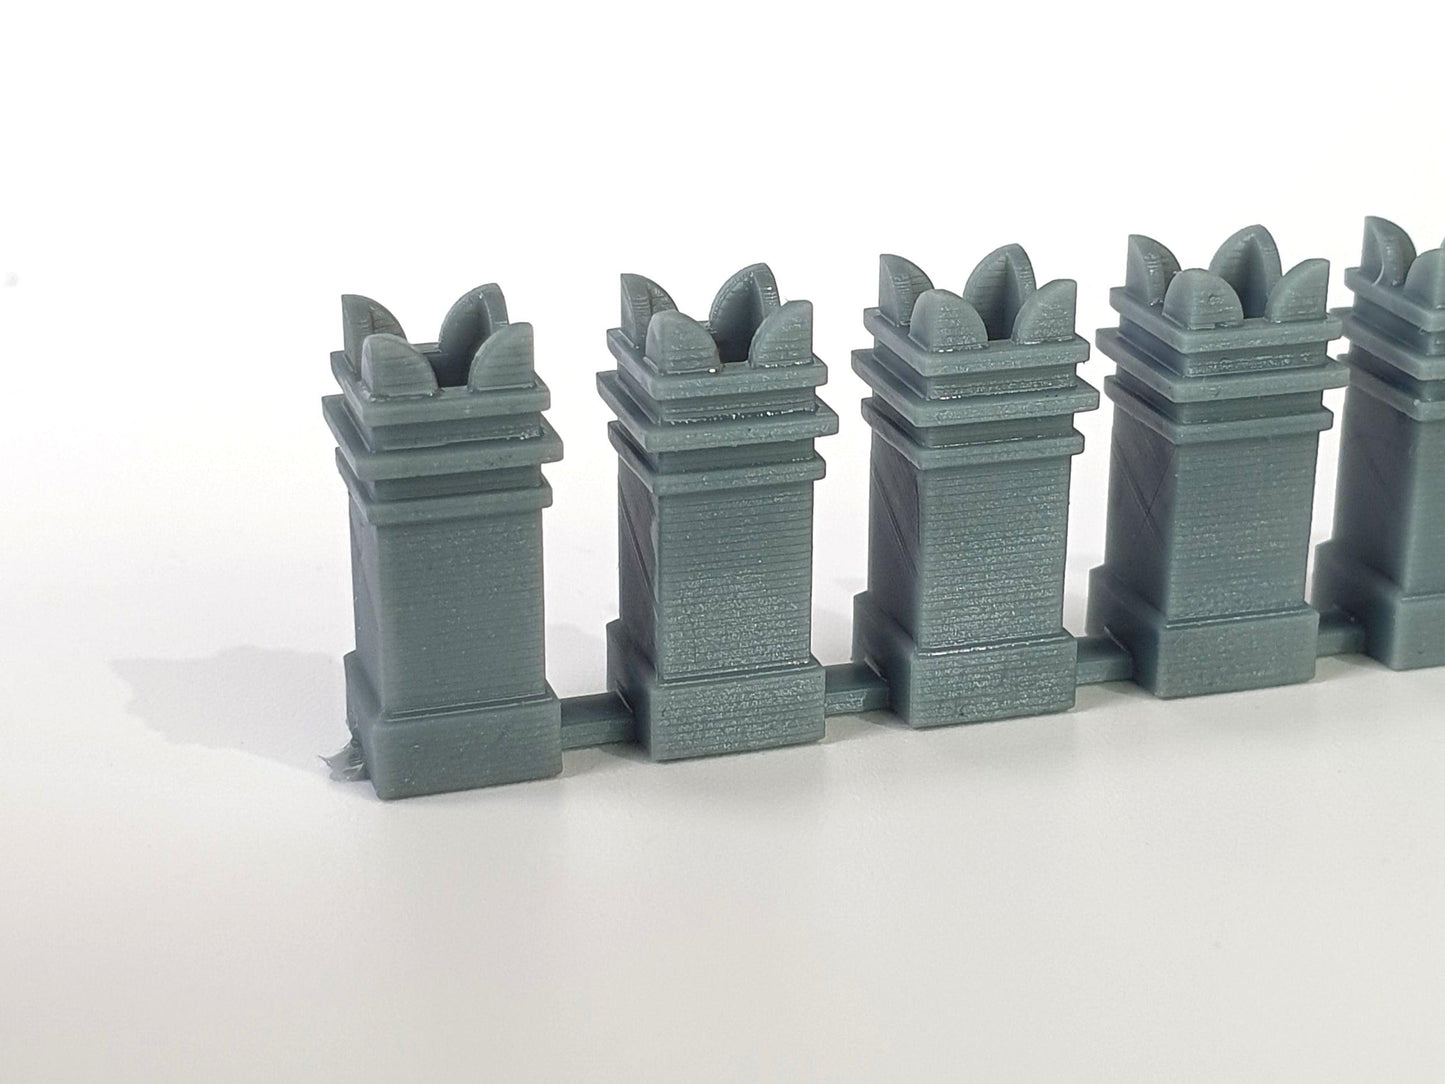 O gauge, 7mm, scale model square crown chimney pots - Three Peaks Models